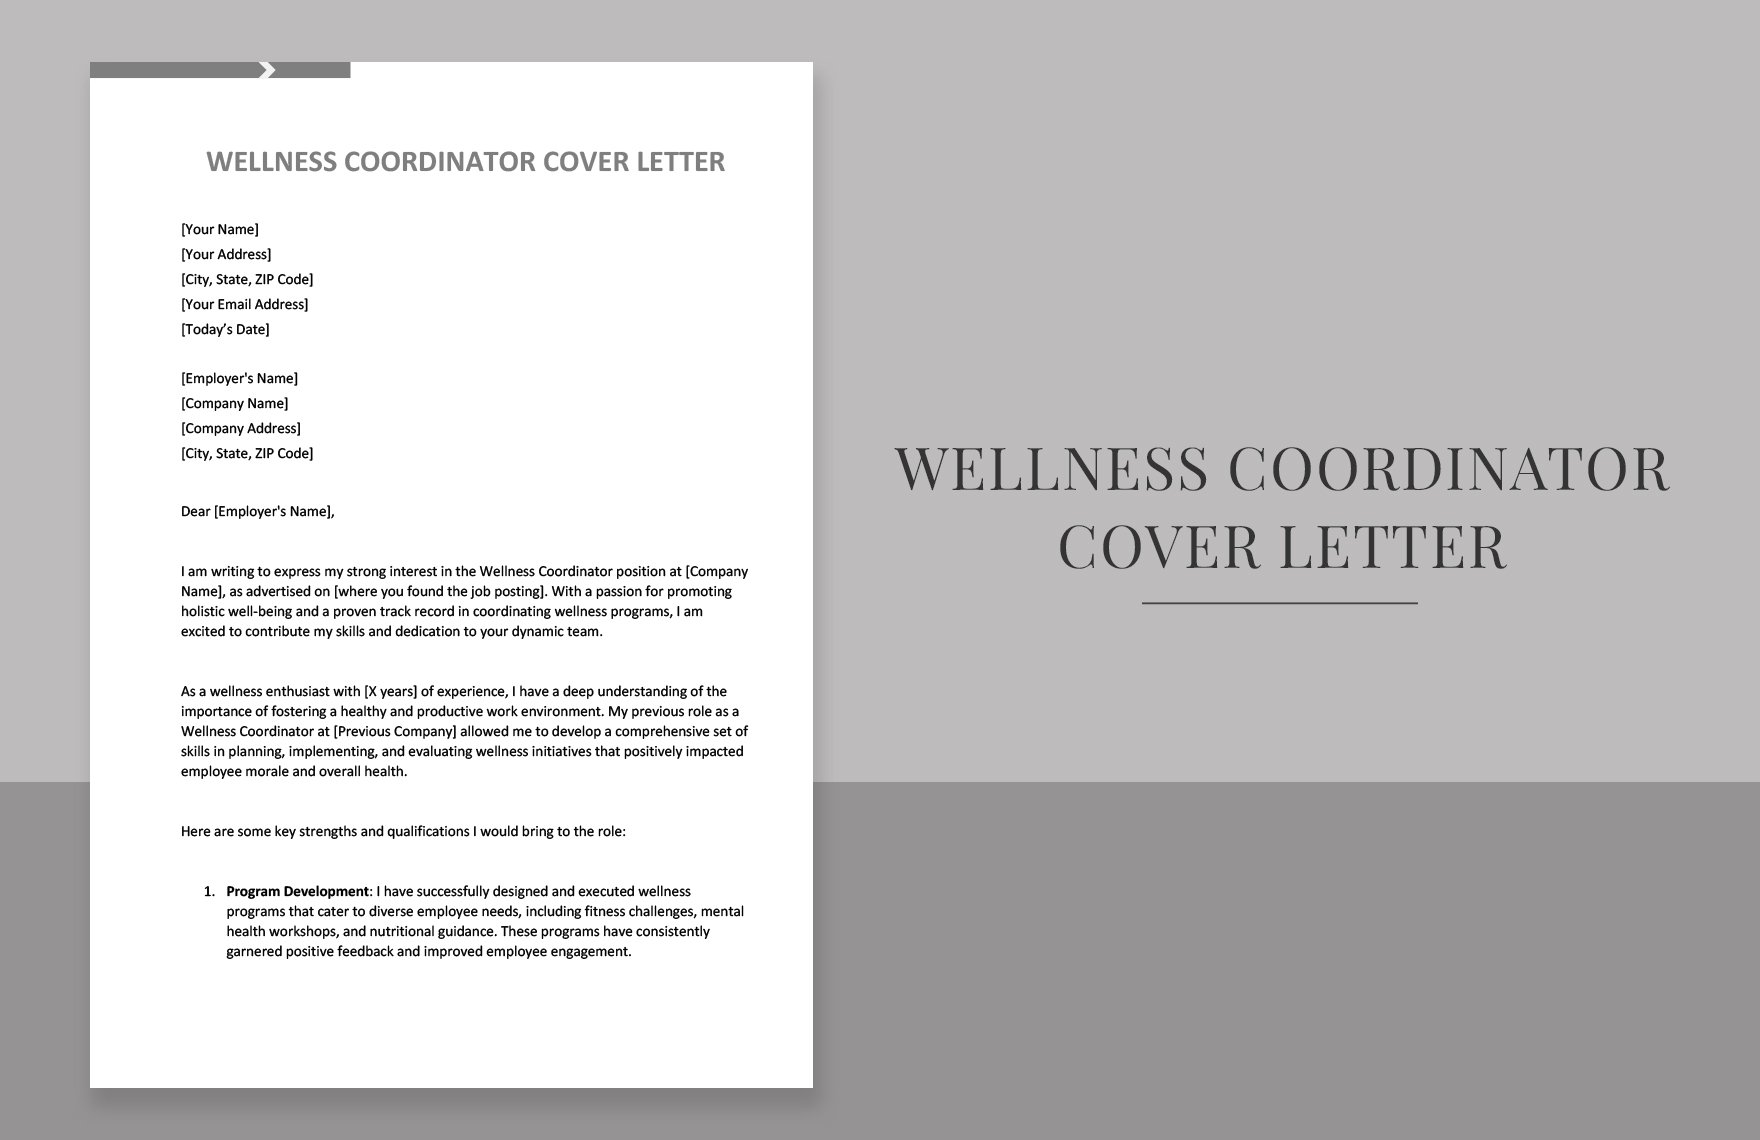 Wellness Coordinator Cover Letter in Word, Google Docs